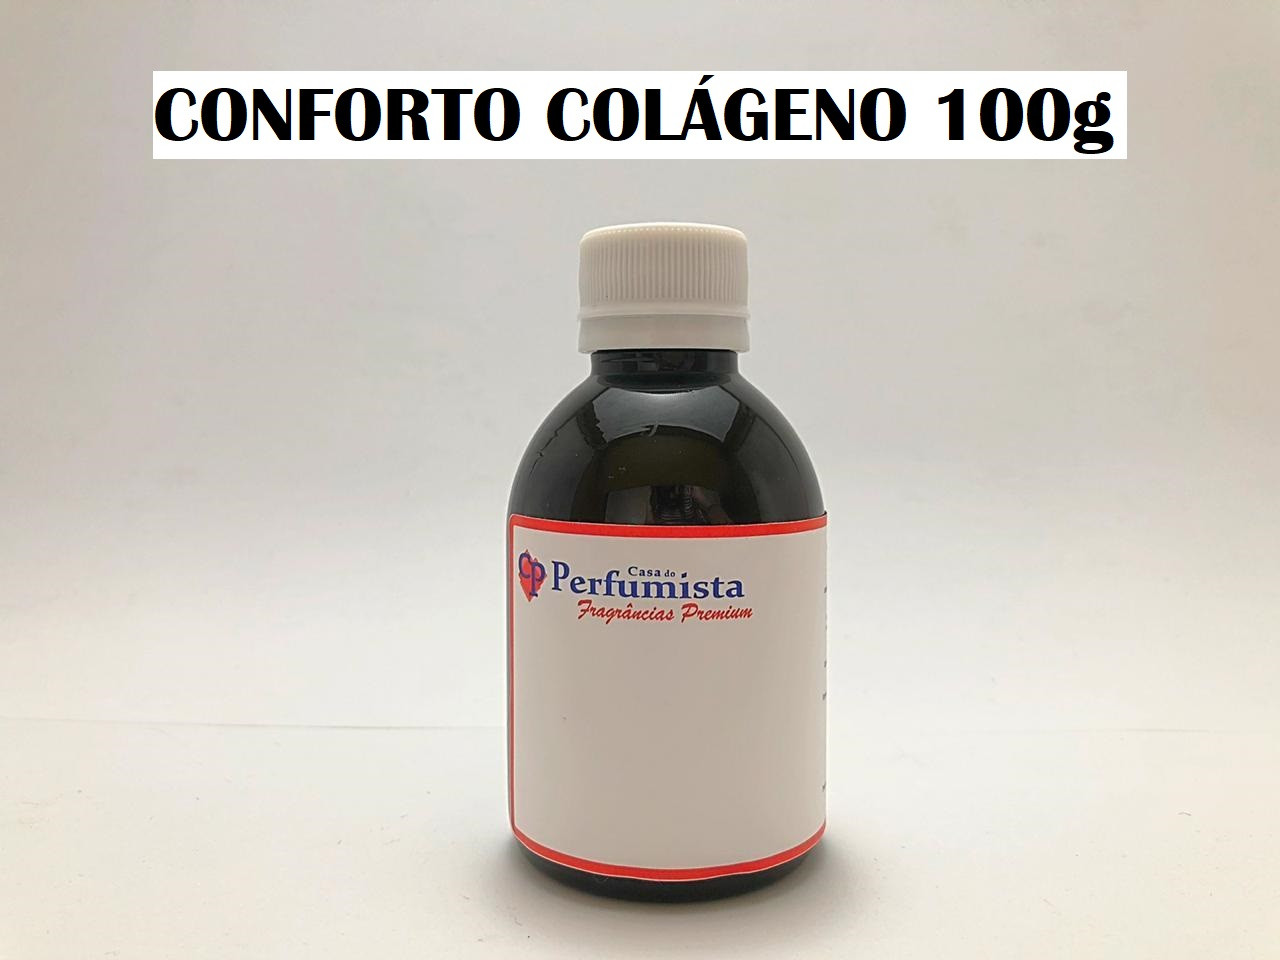 CONFORTO COLÁGENO - 100g